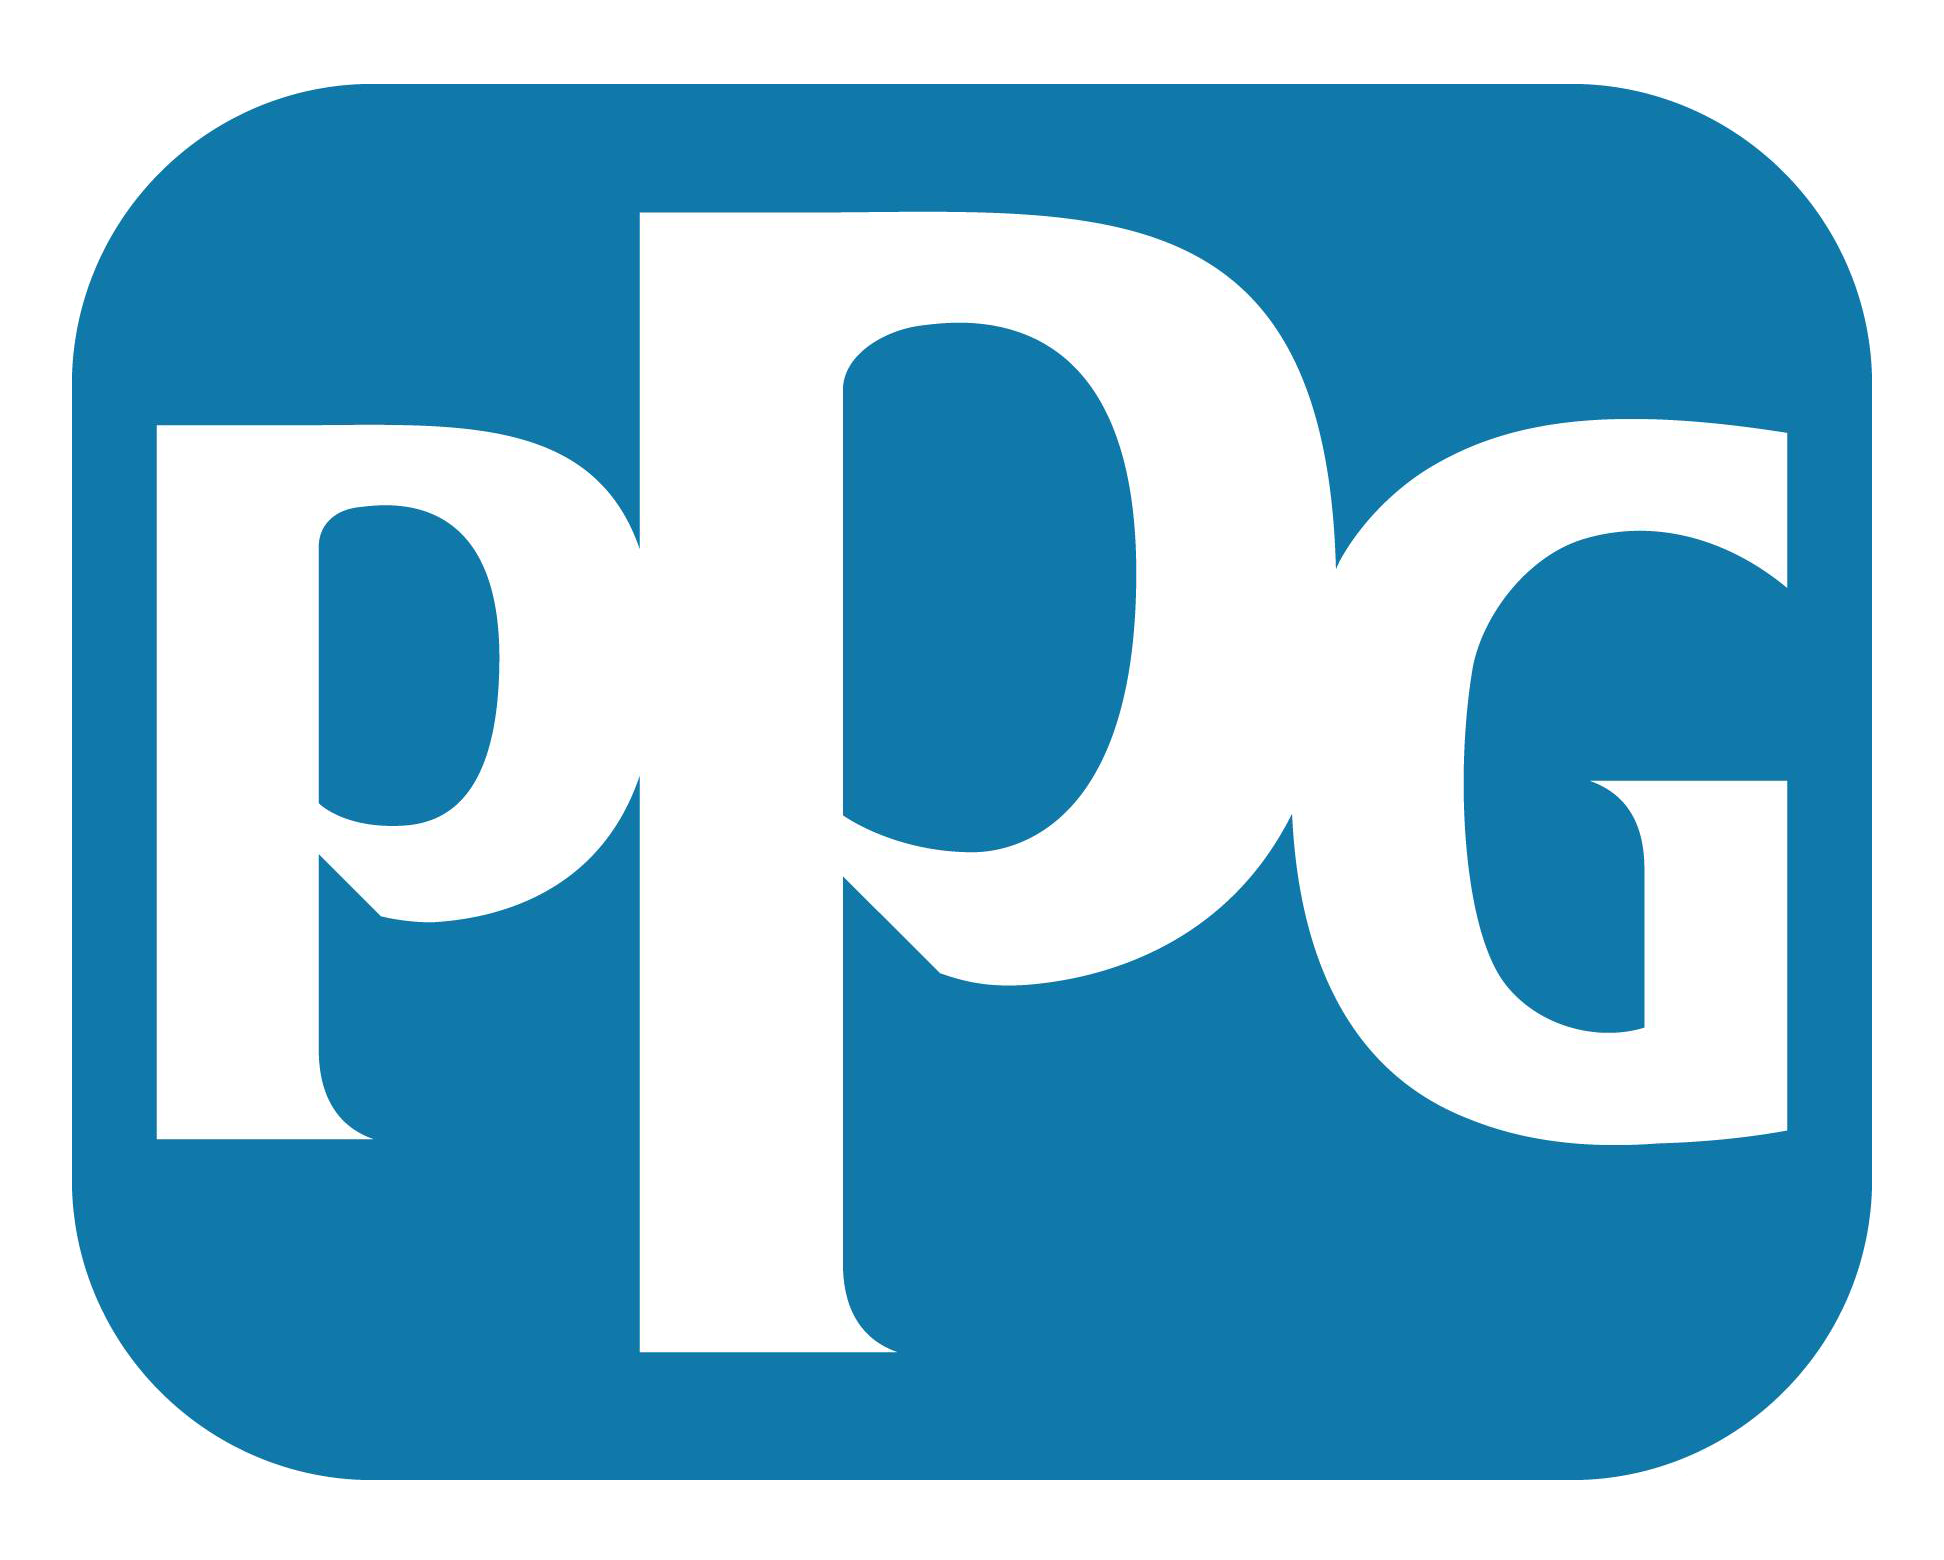 PPG Logo PNG Image